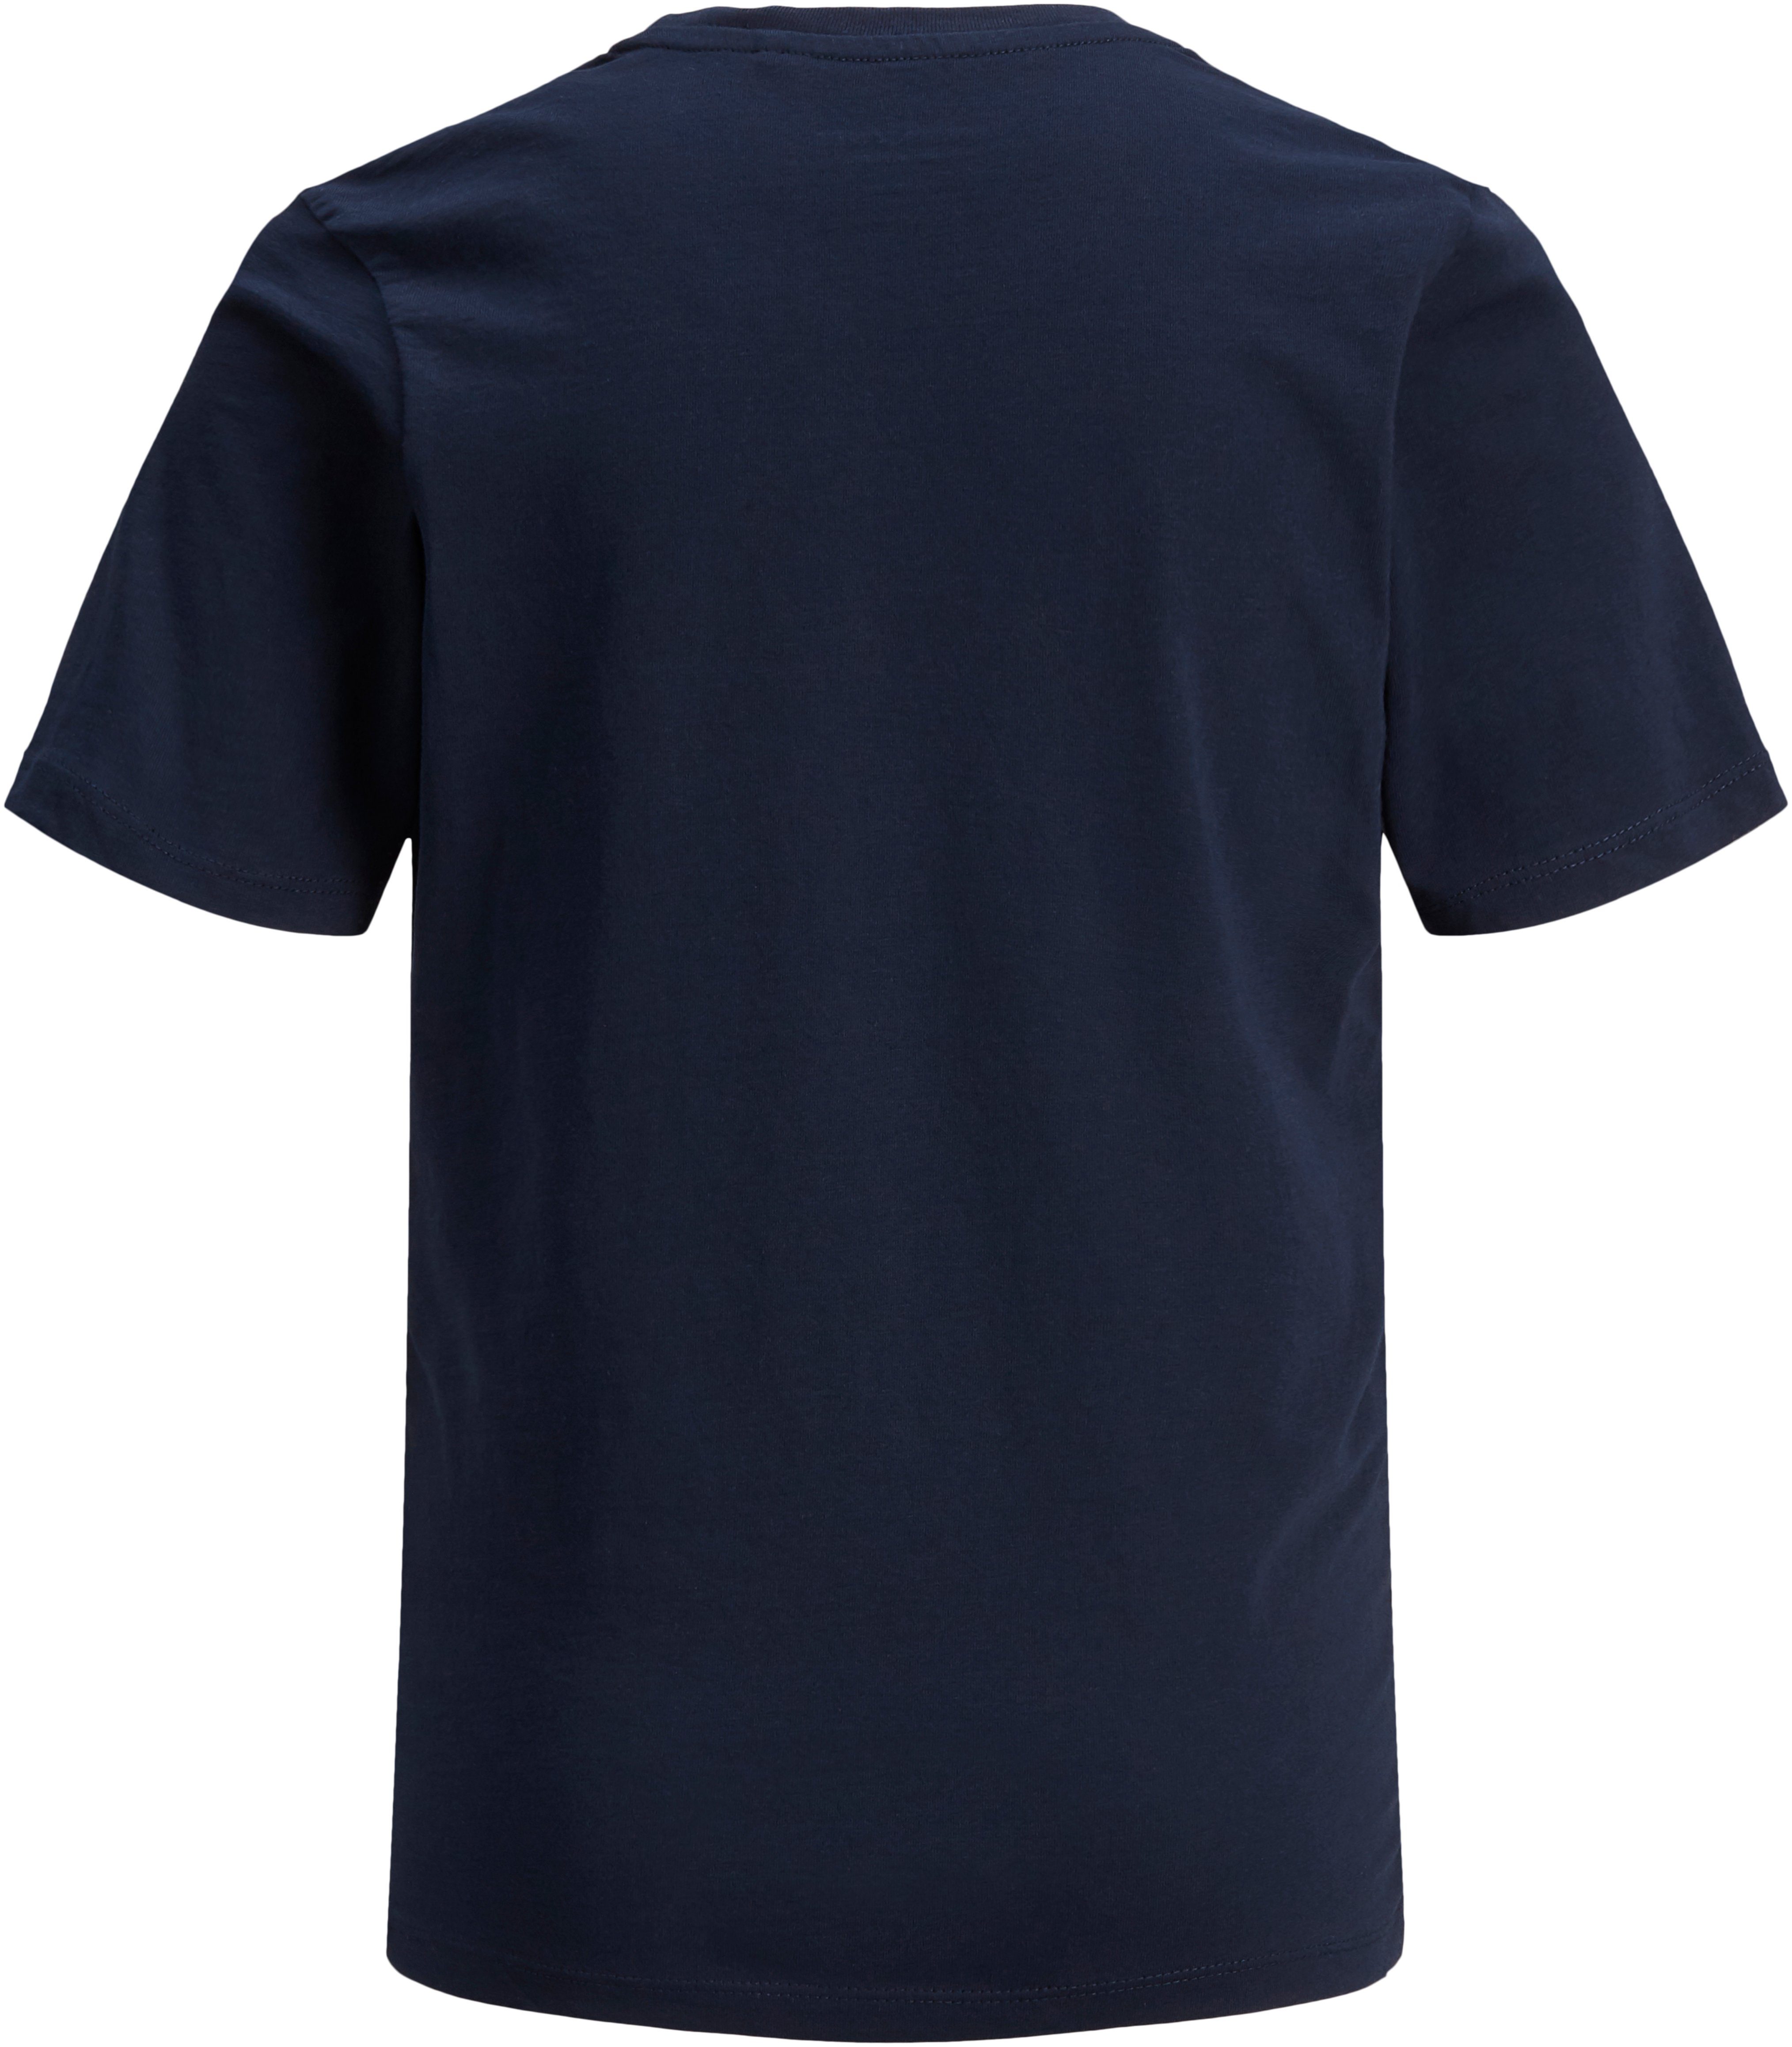 Jack & Jones Junior T-Shirt navy Print blazer/Large